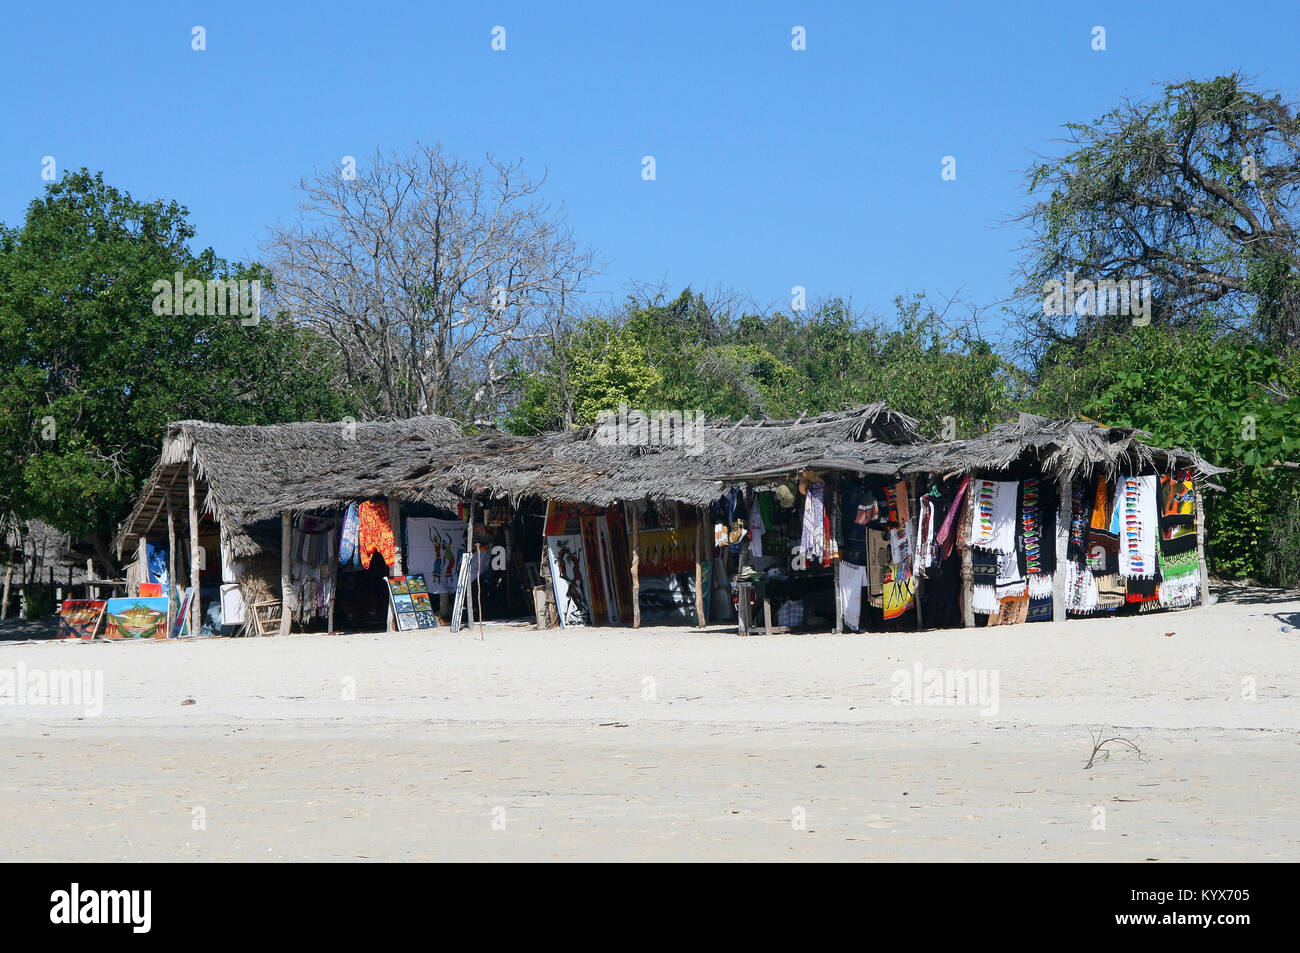 Tapisserie tissu et Stalles du vendeur sur plage, Zanzibar, Tanzanie. Banque D'Images